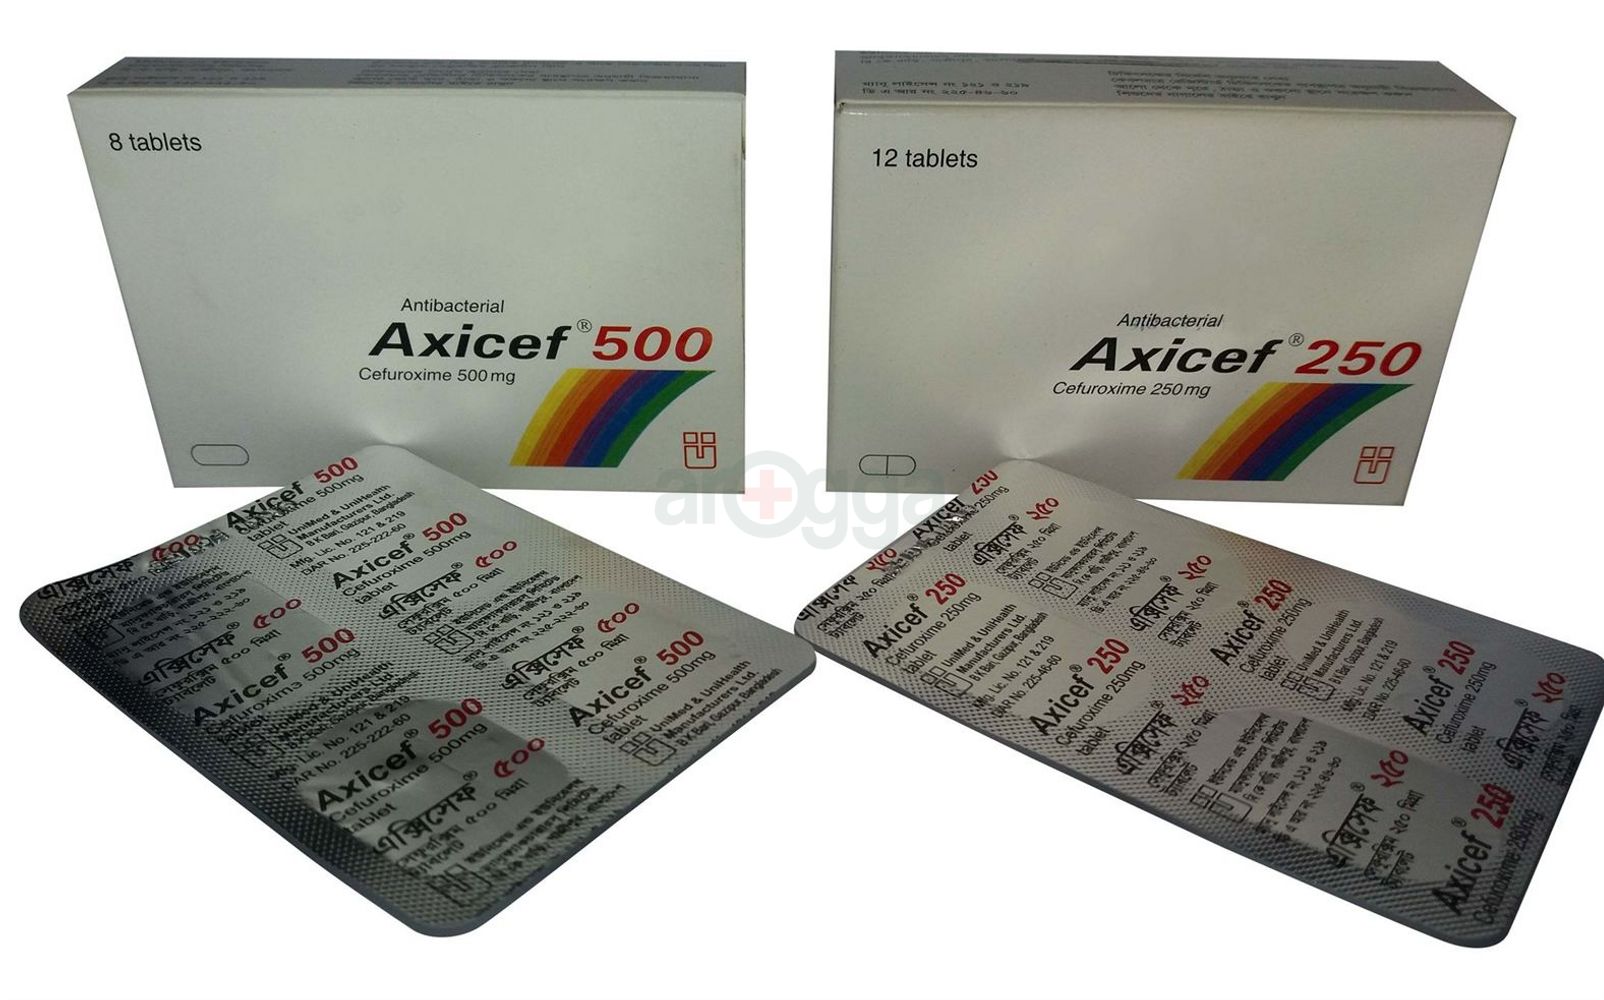 Axicef 250